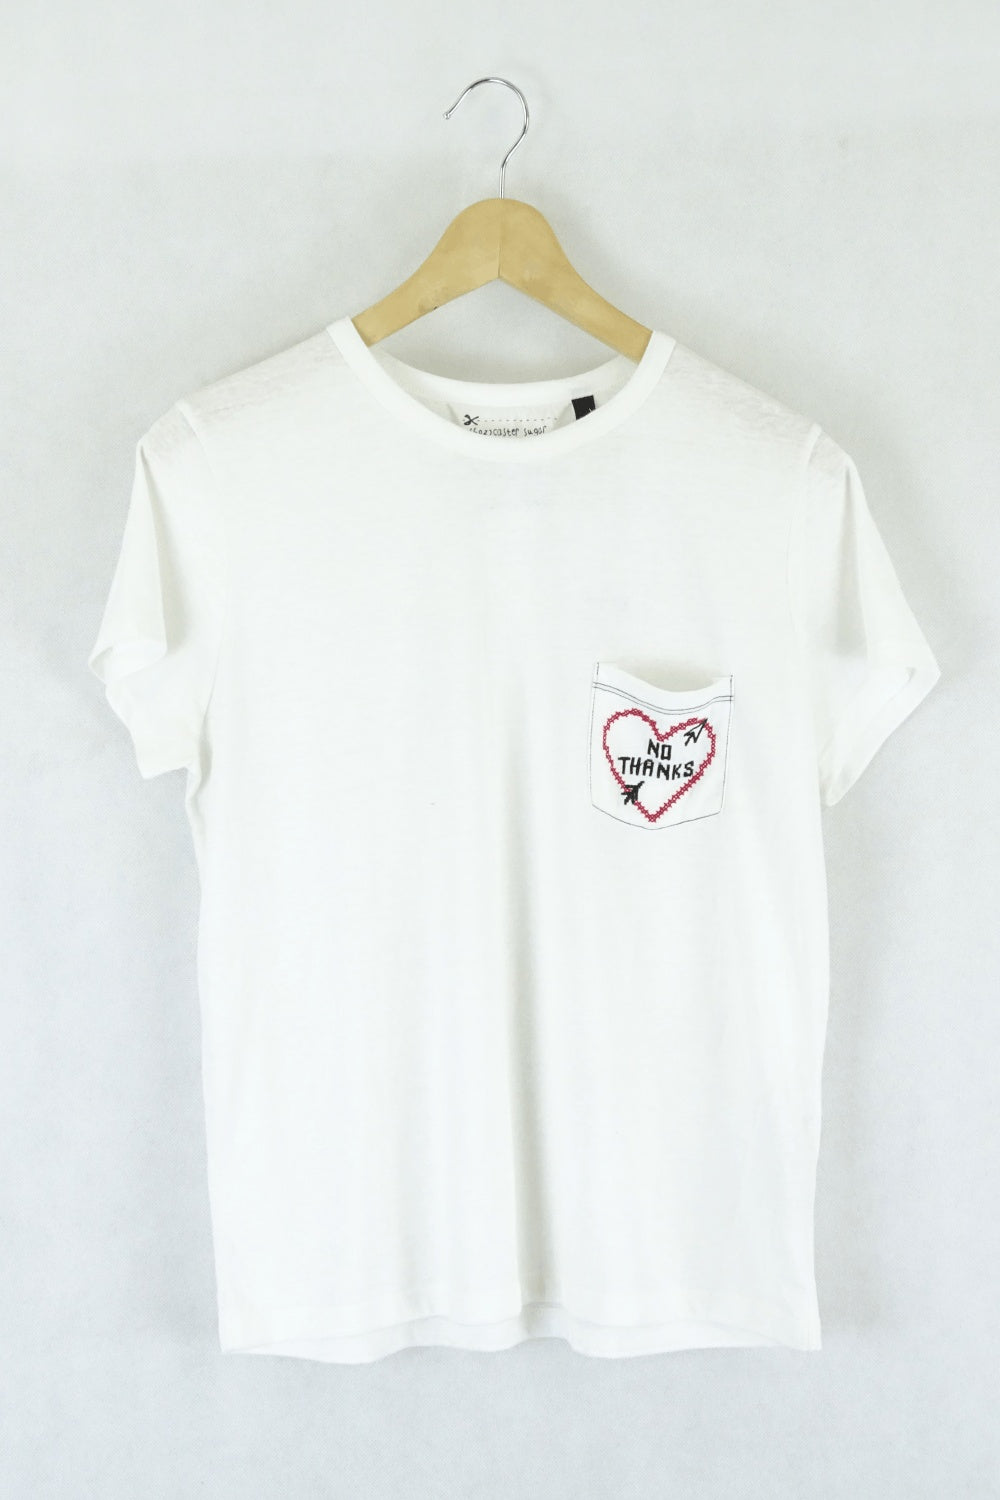 Topshop White T-shirt 14